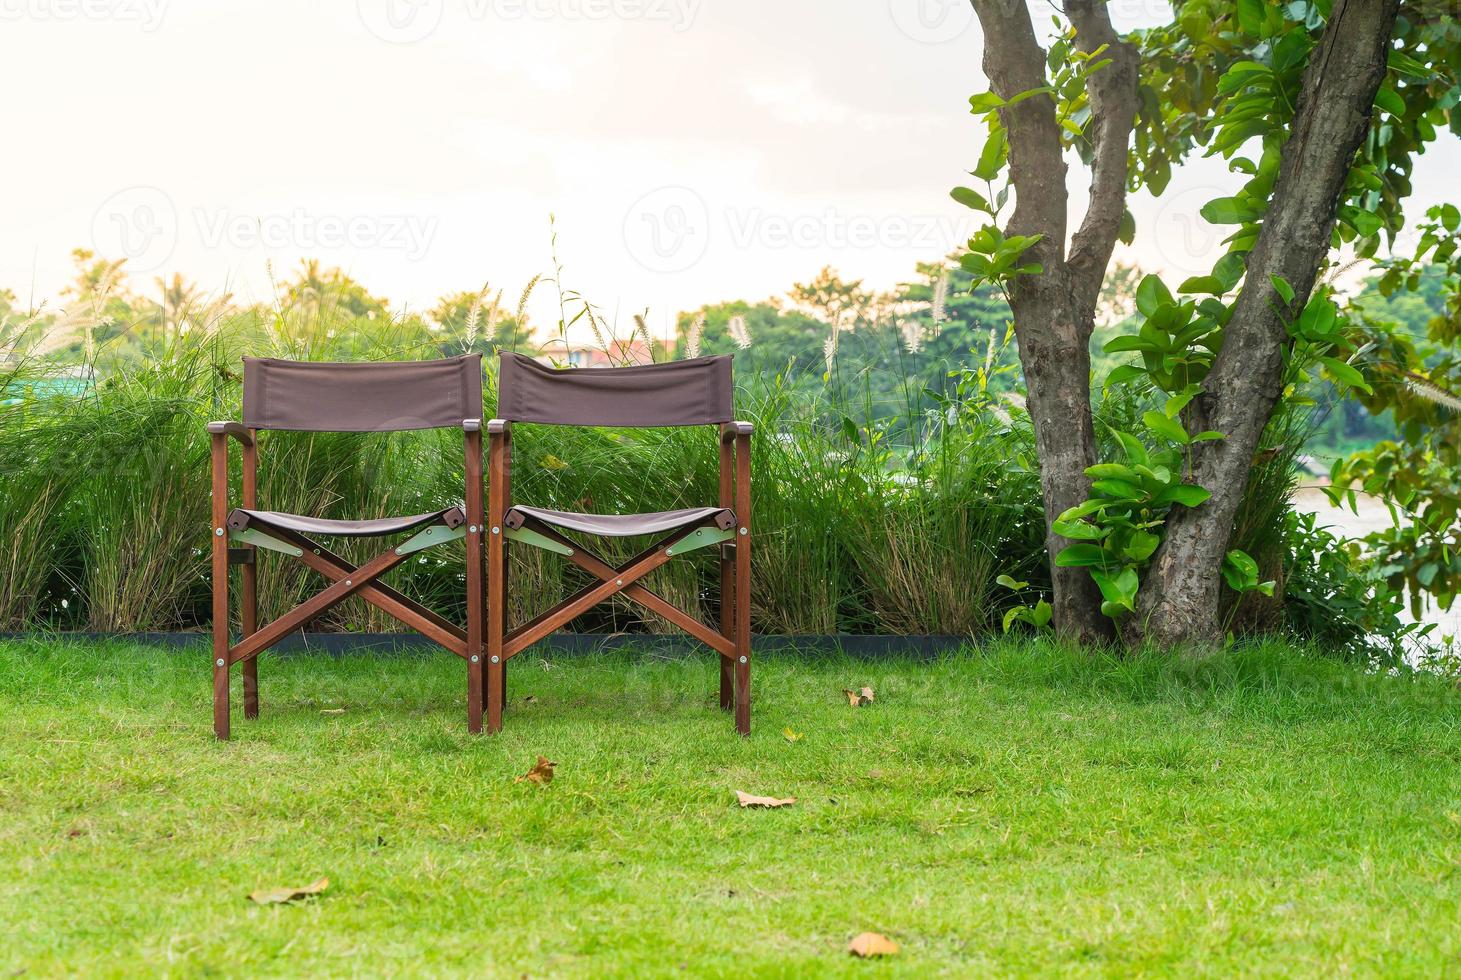 tom stol på gräset i parken - med solskinnsbearbetningsstil foto